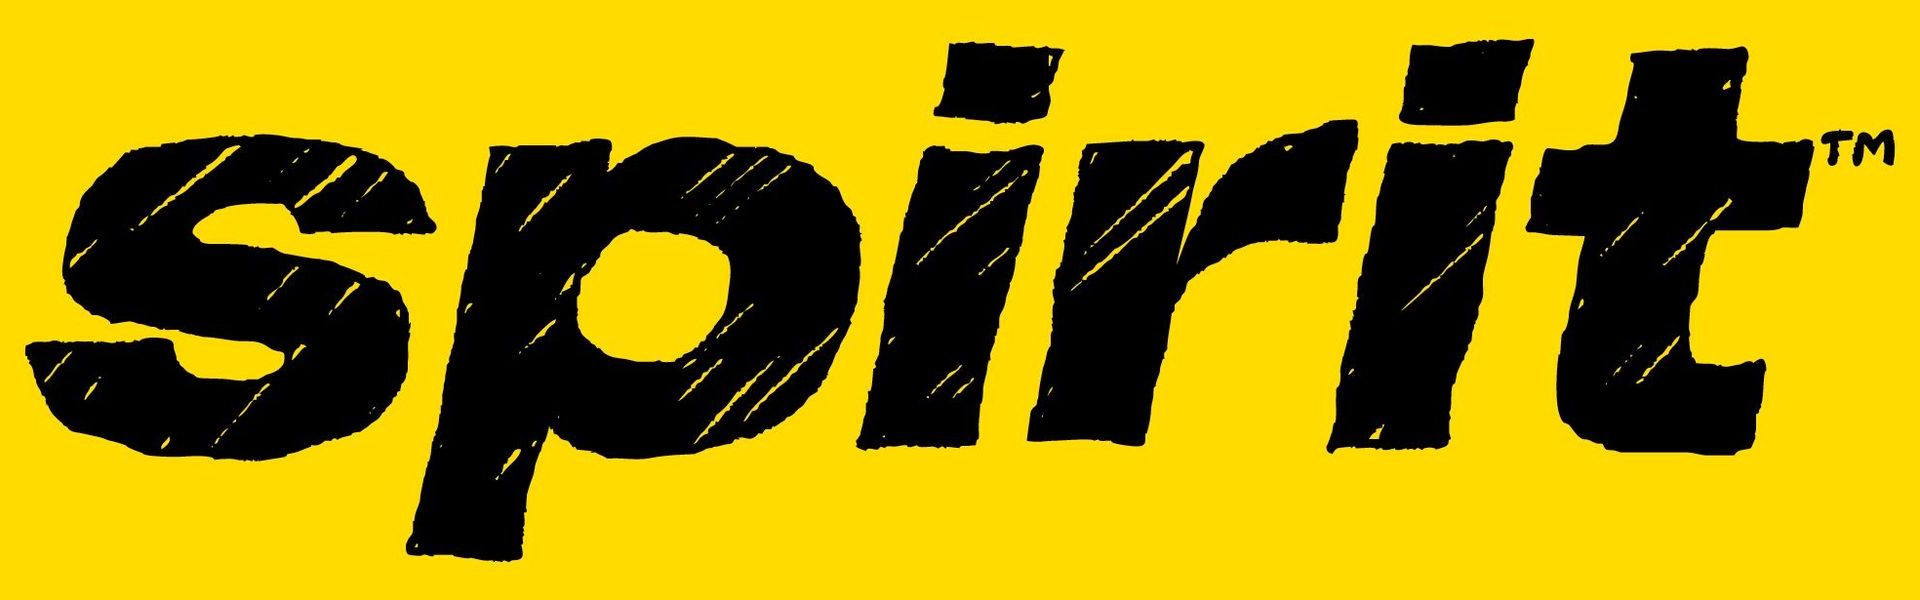 Spirit-Airlines-logo-1920x600